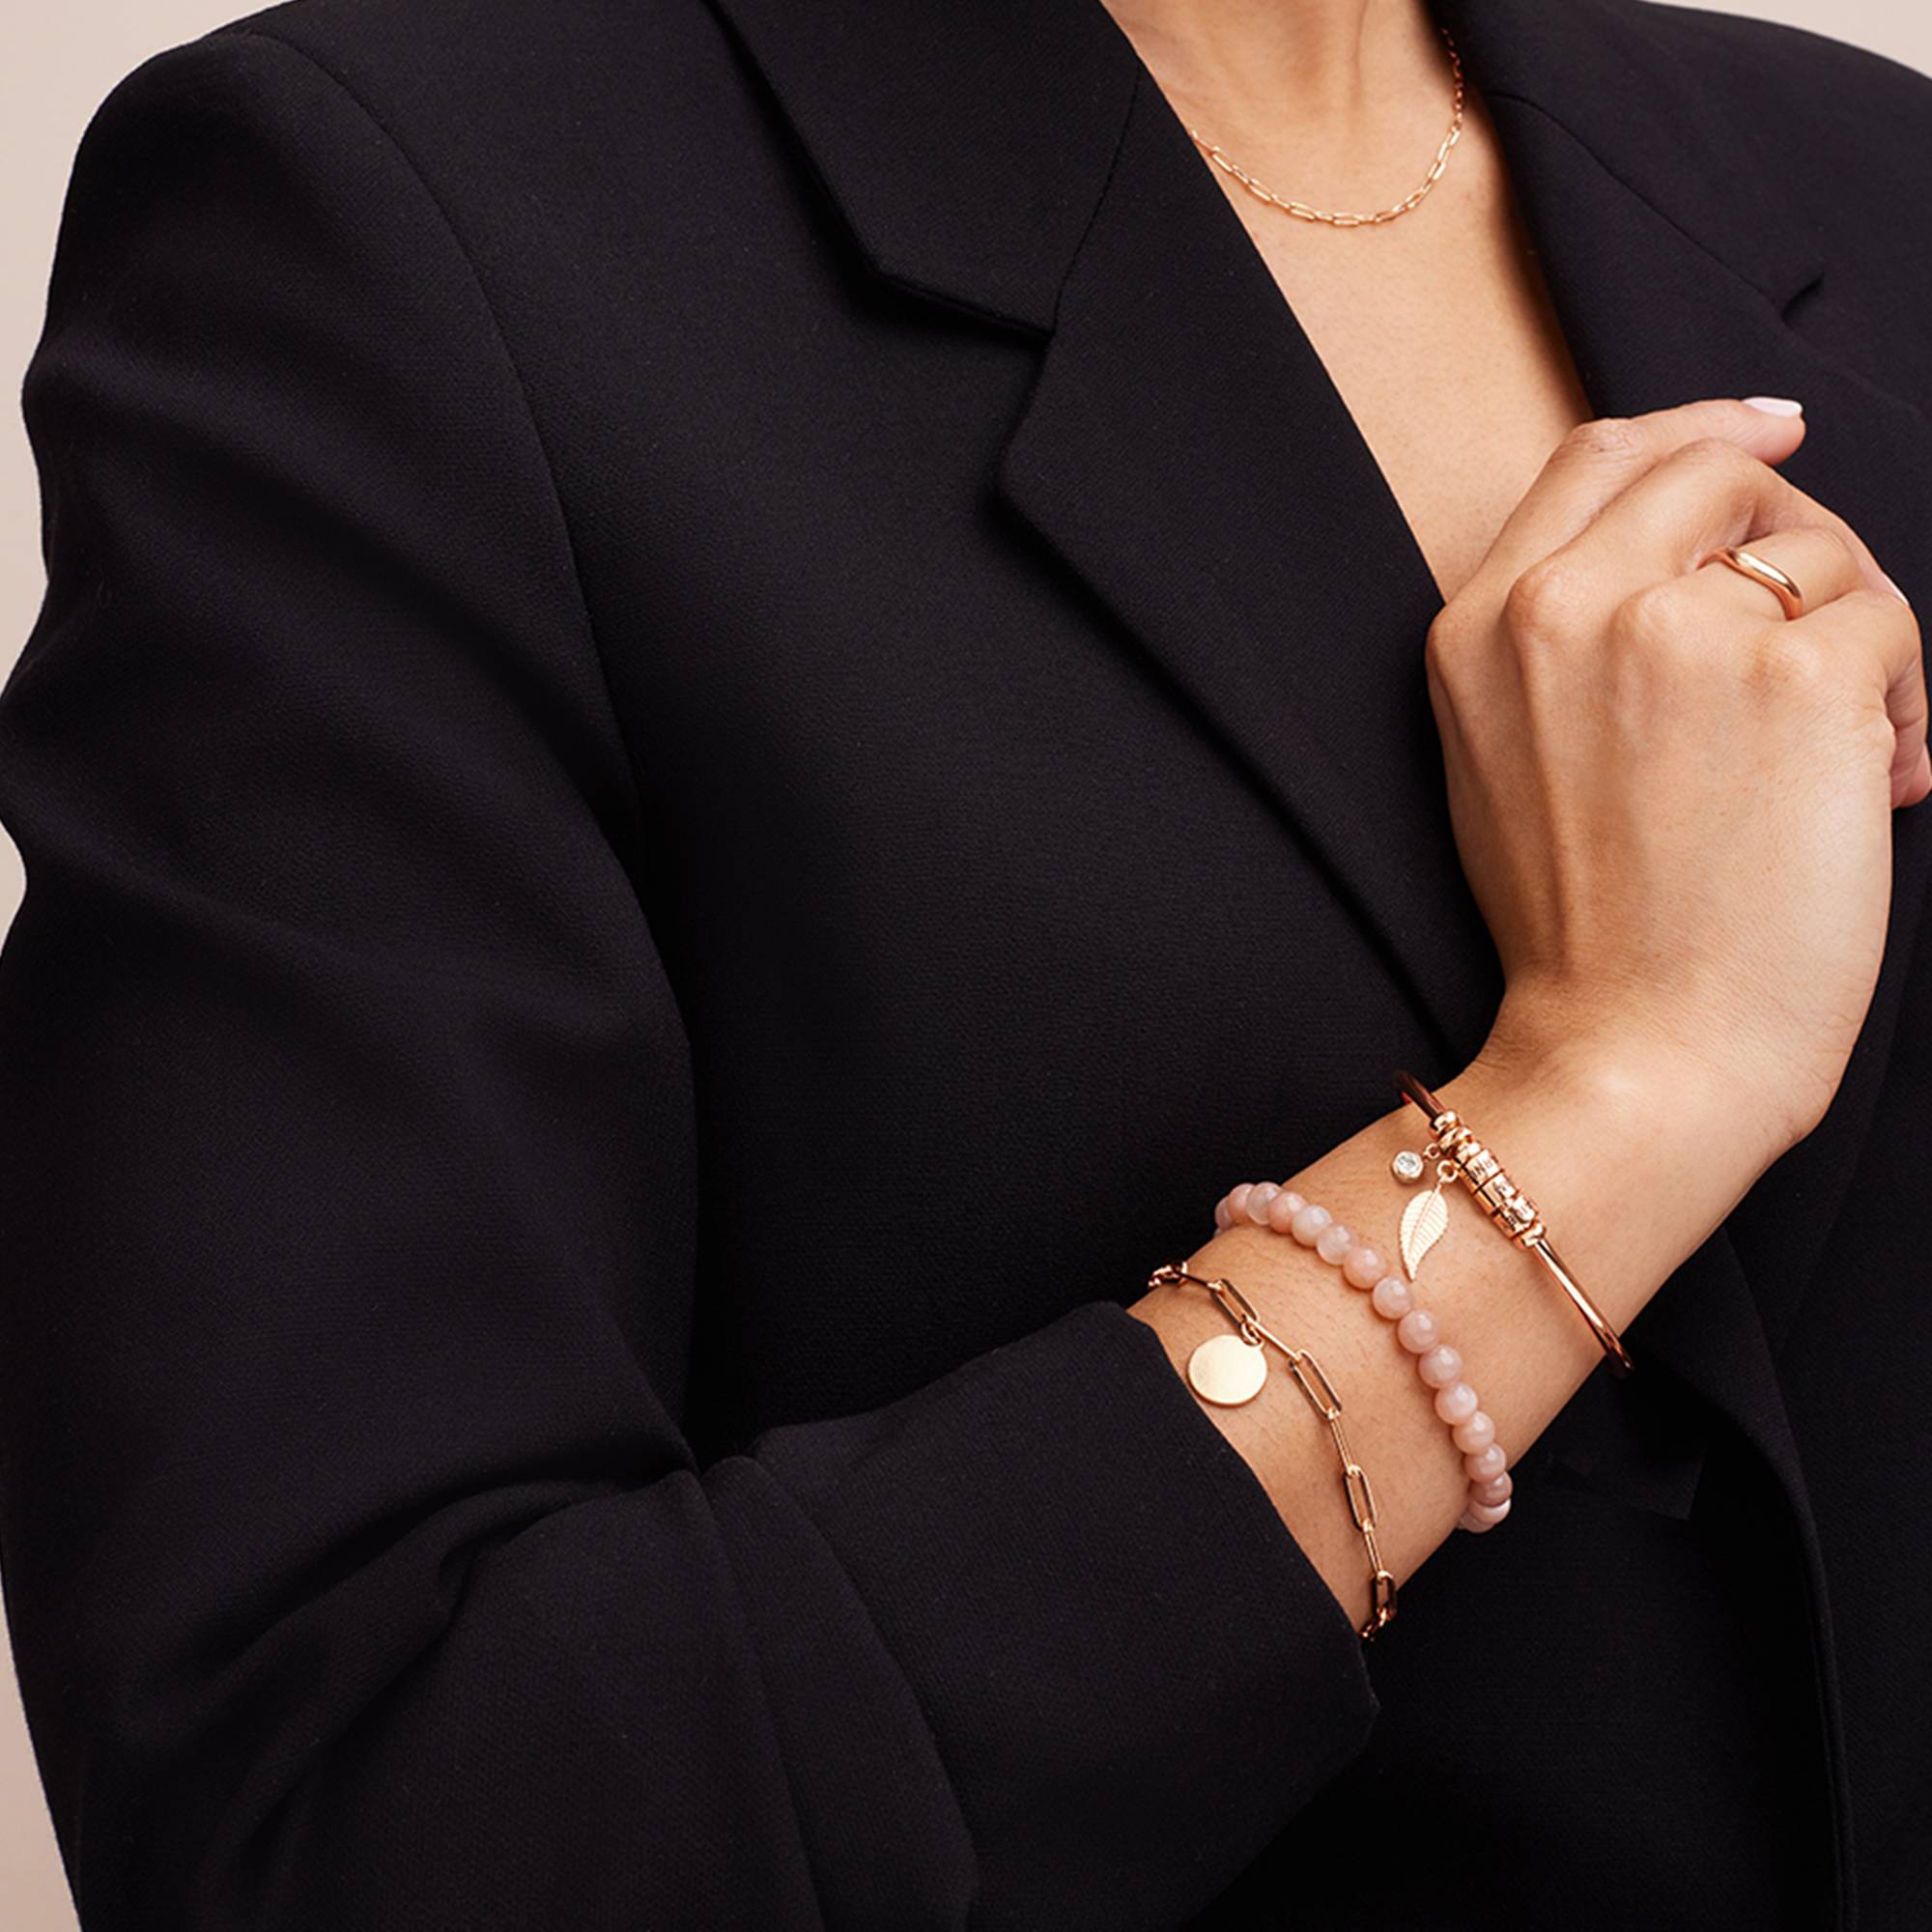 Linda Bangle Bracelet in Rose Gold Plating with 0.10 ct Diamond-3 product photo